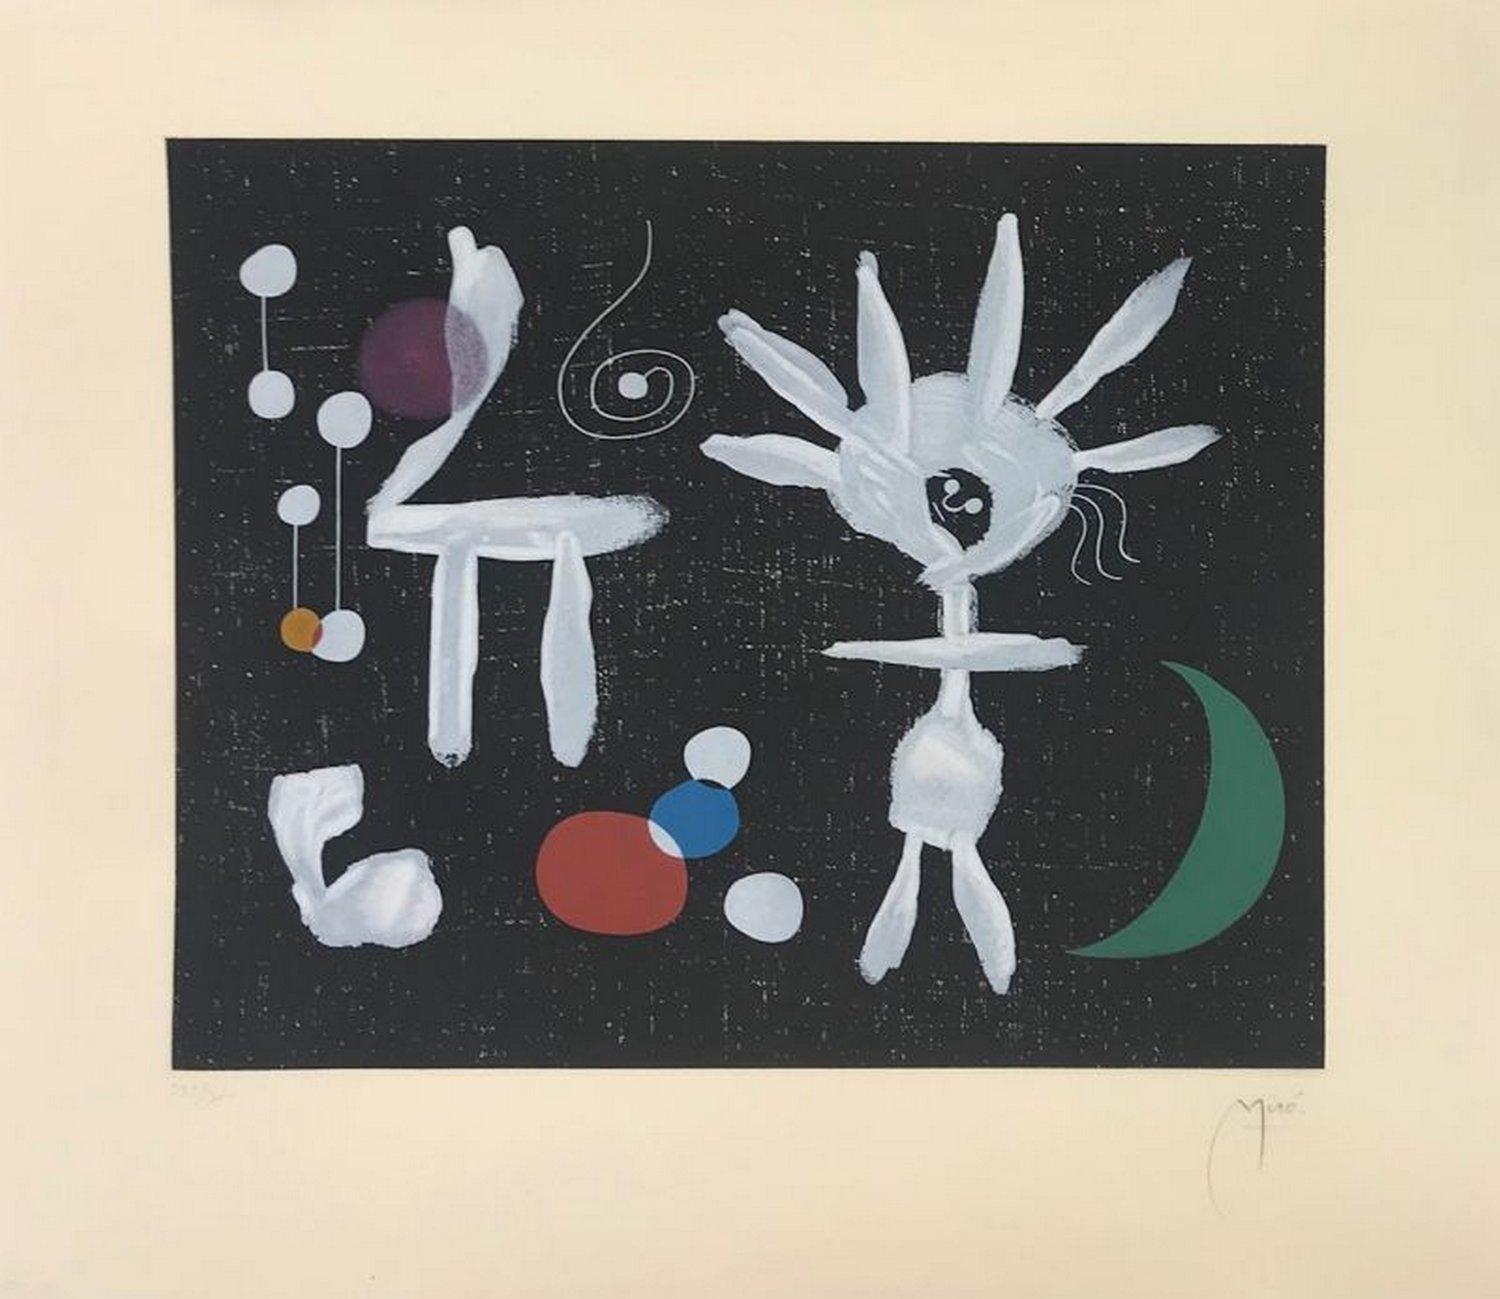 Joan Miró Abstract Print - Morning rain in the moonlight 